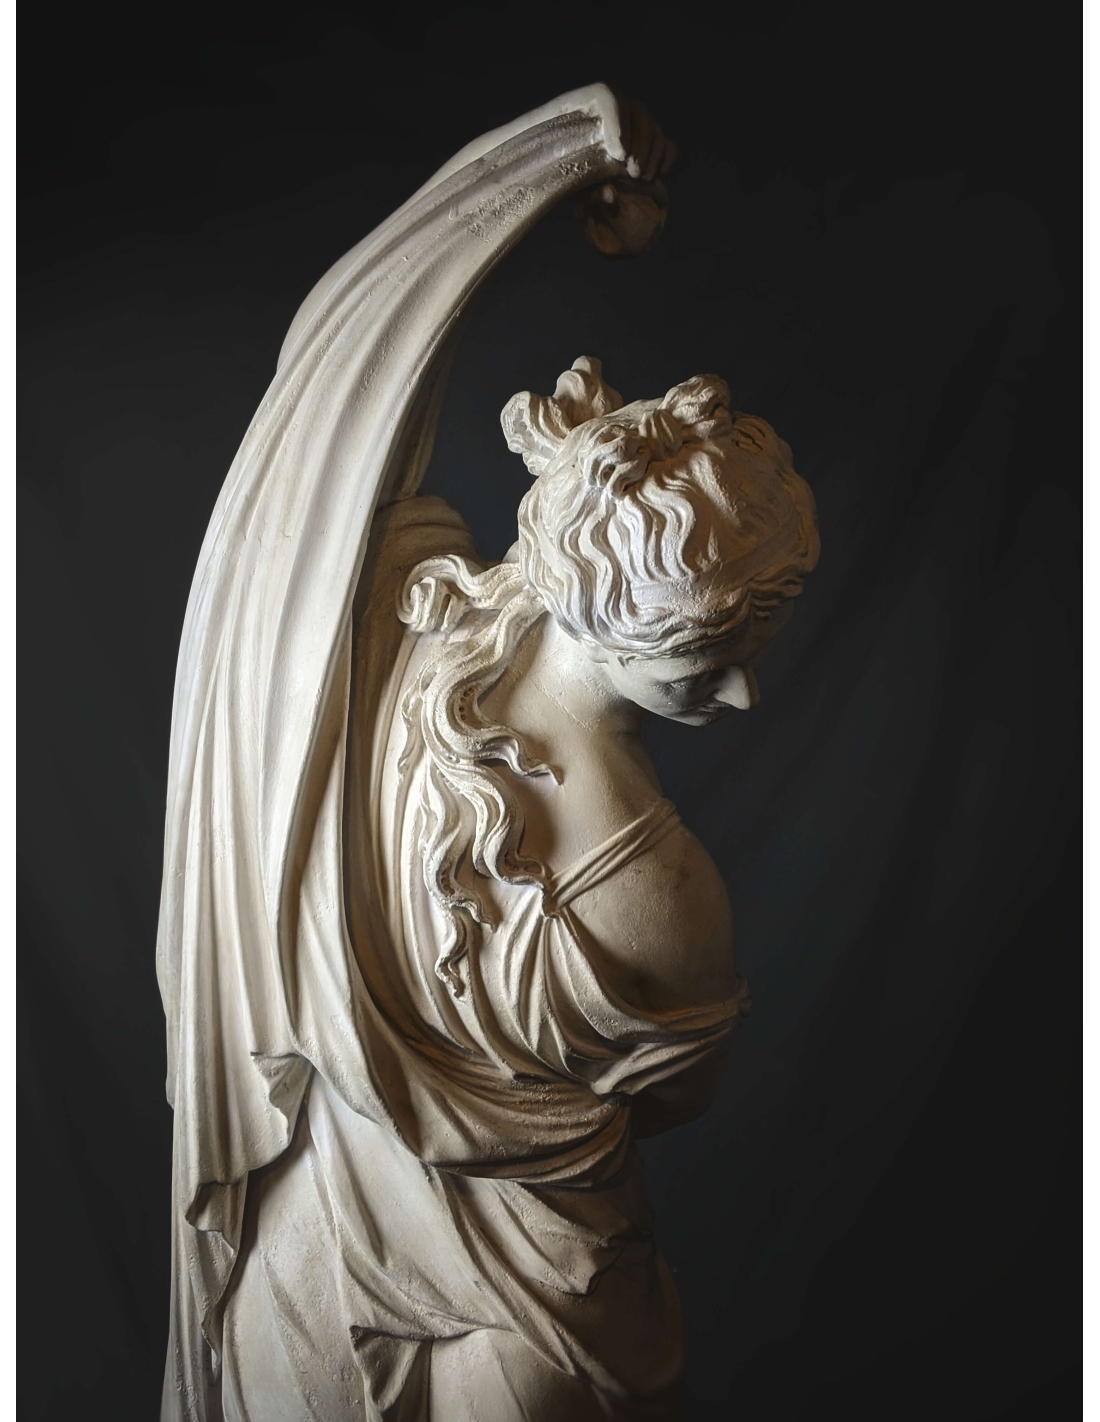 Dibujo de la escultura Venus Calipigia by Rafa-el11 on DeviantArt